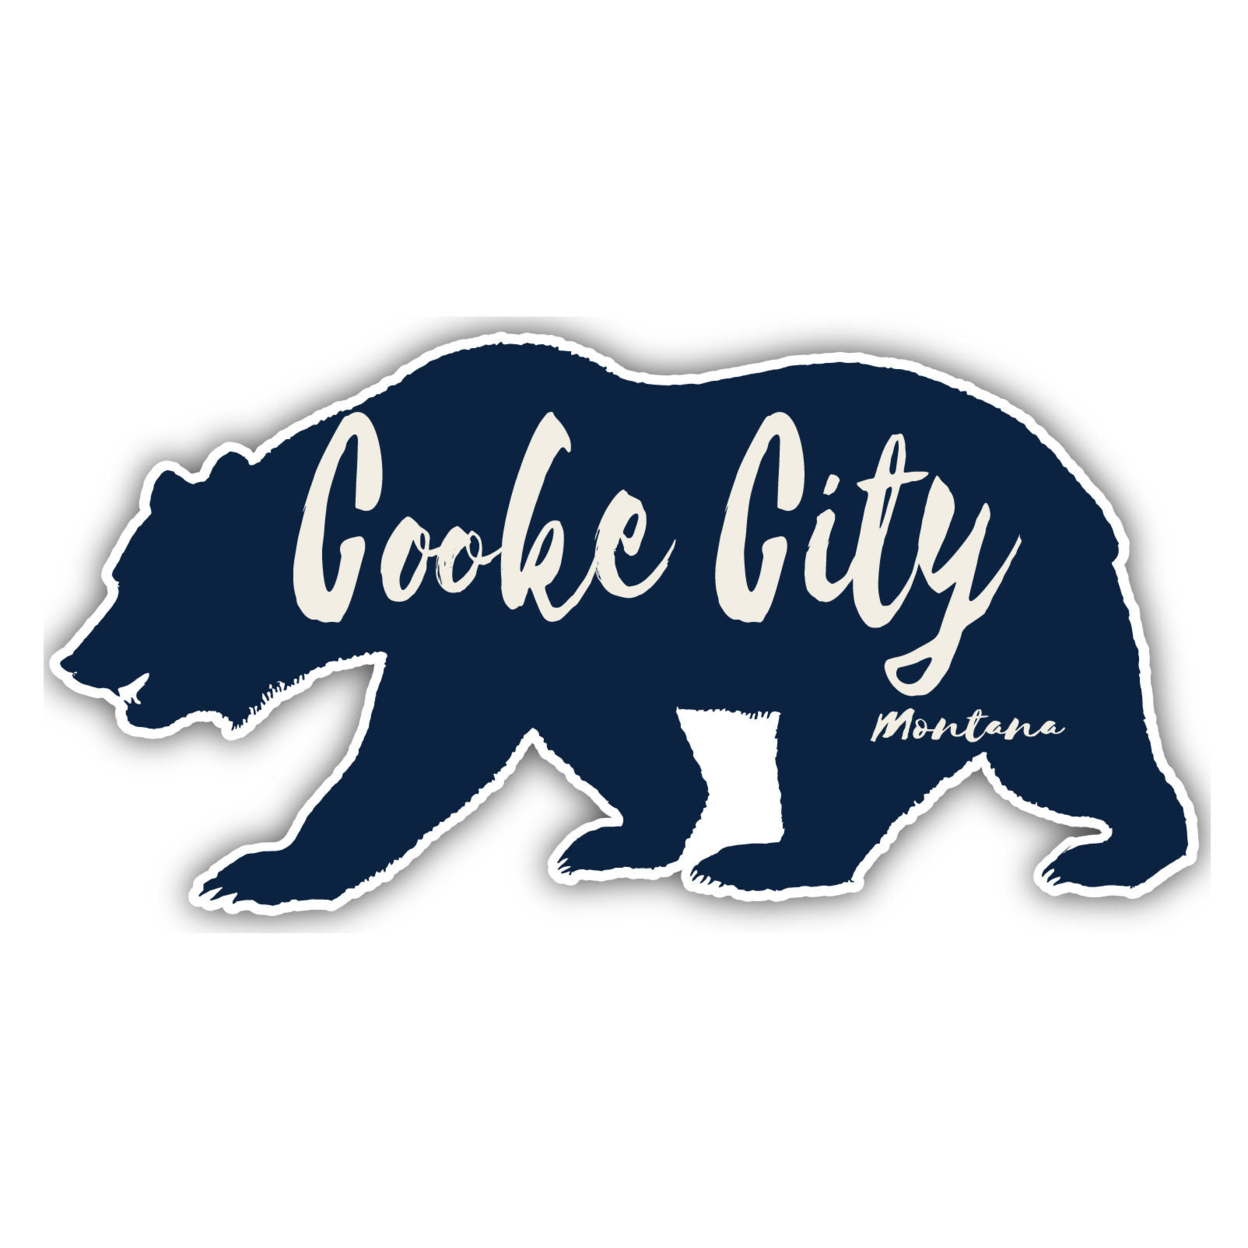 Cooke City Montana Souvenir Decorative Stickers (Choose Theme And Size) - Single Unit, 12-Inch, Bear